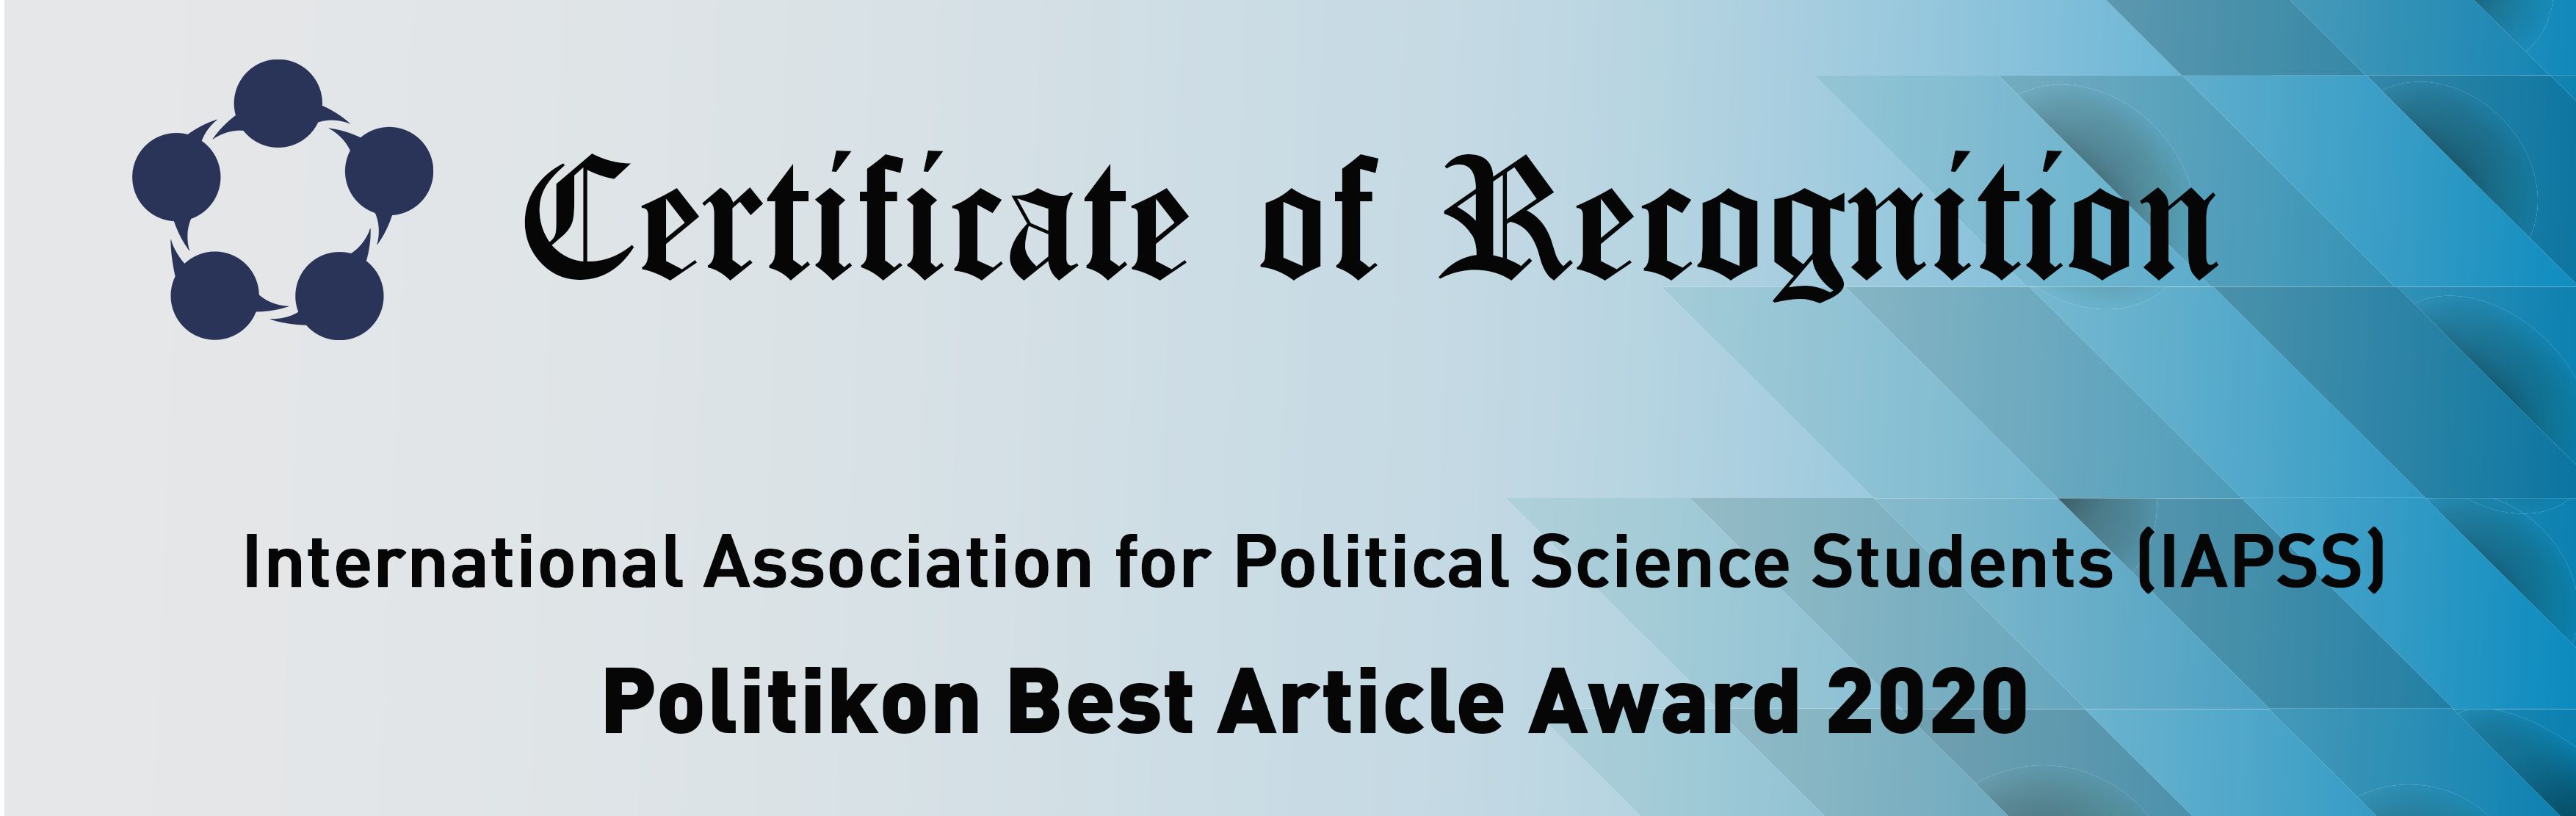 2020_Politikon_Best_Article_Award.jpg